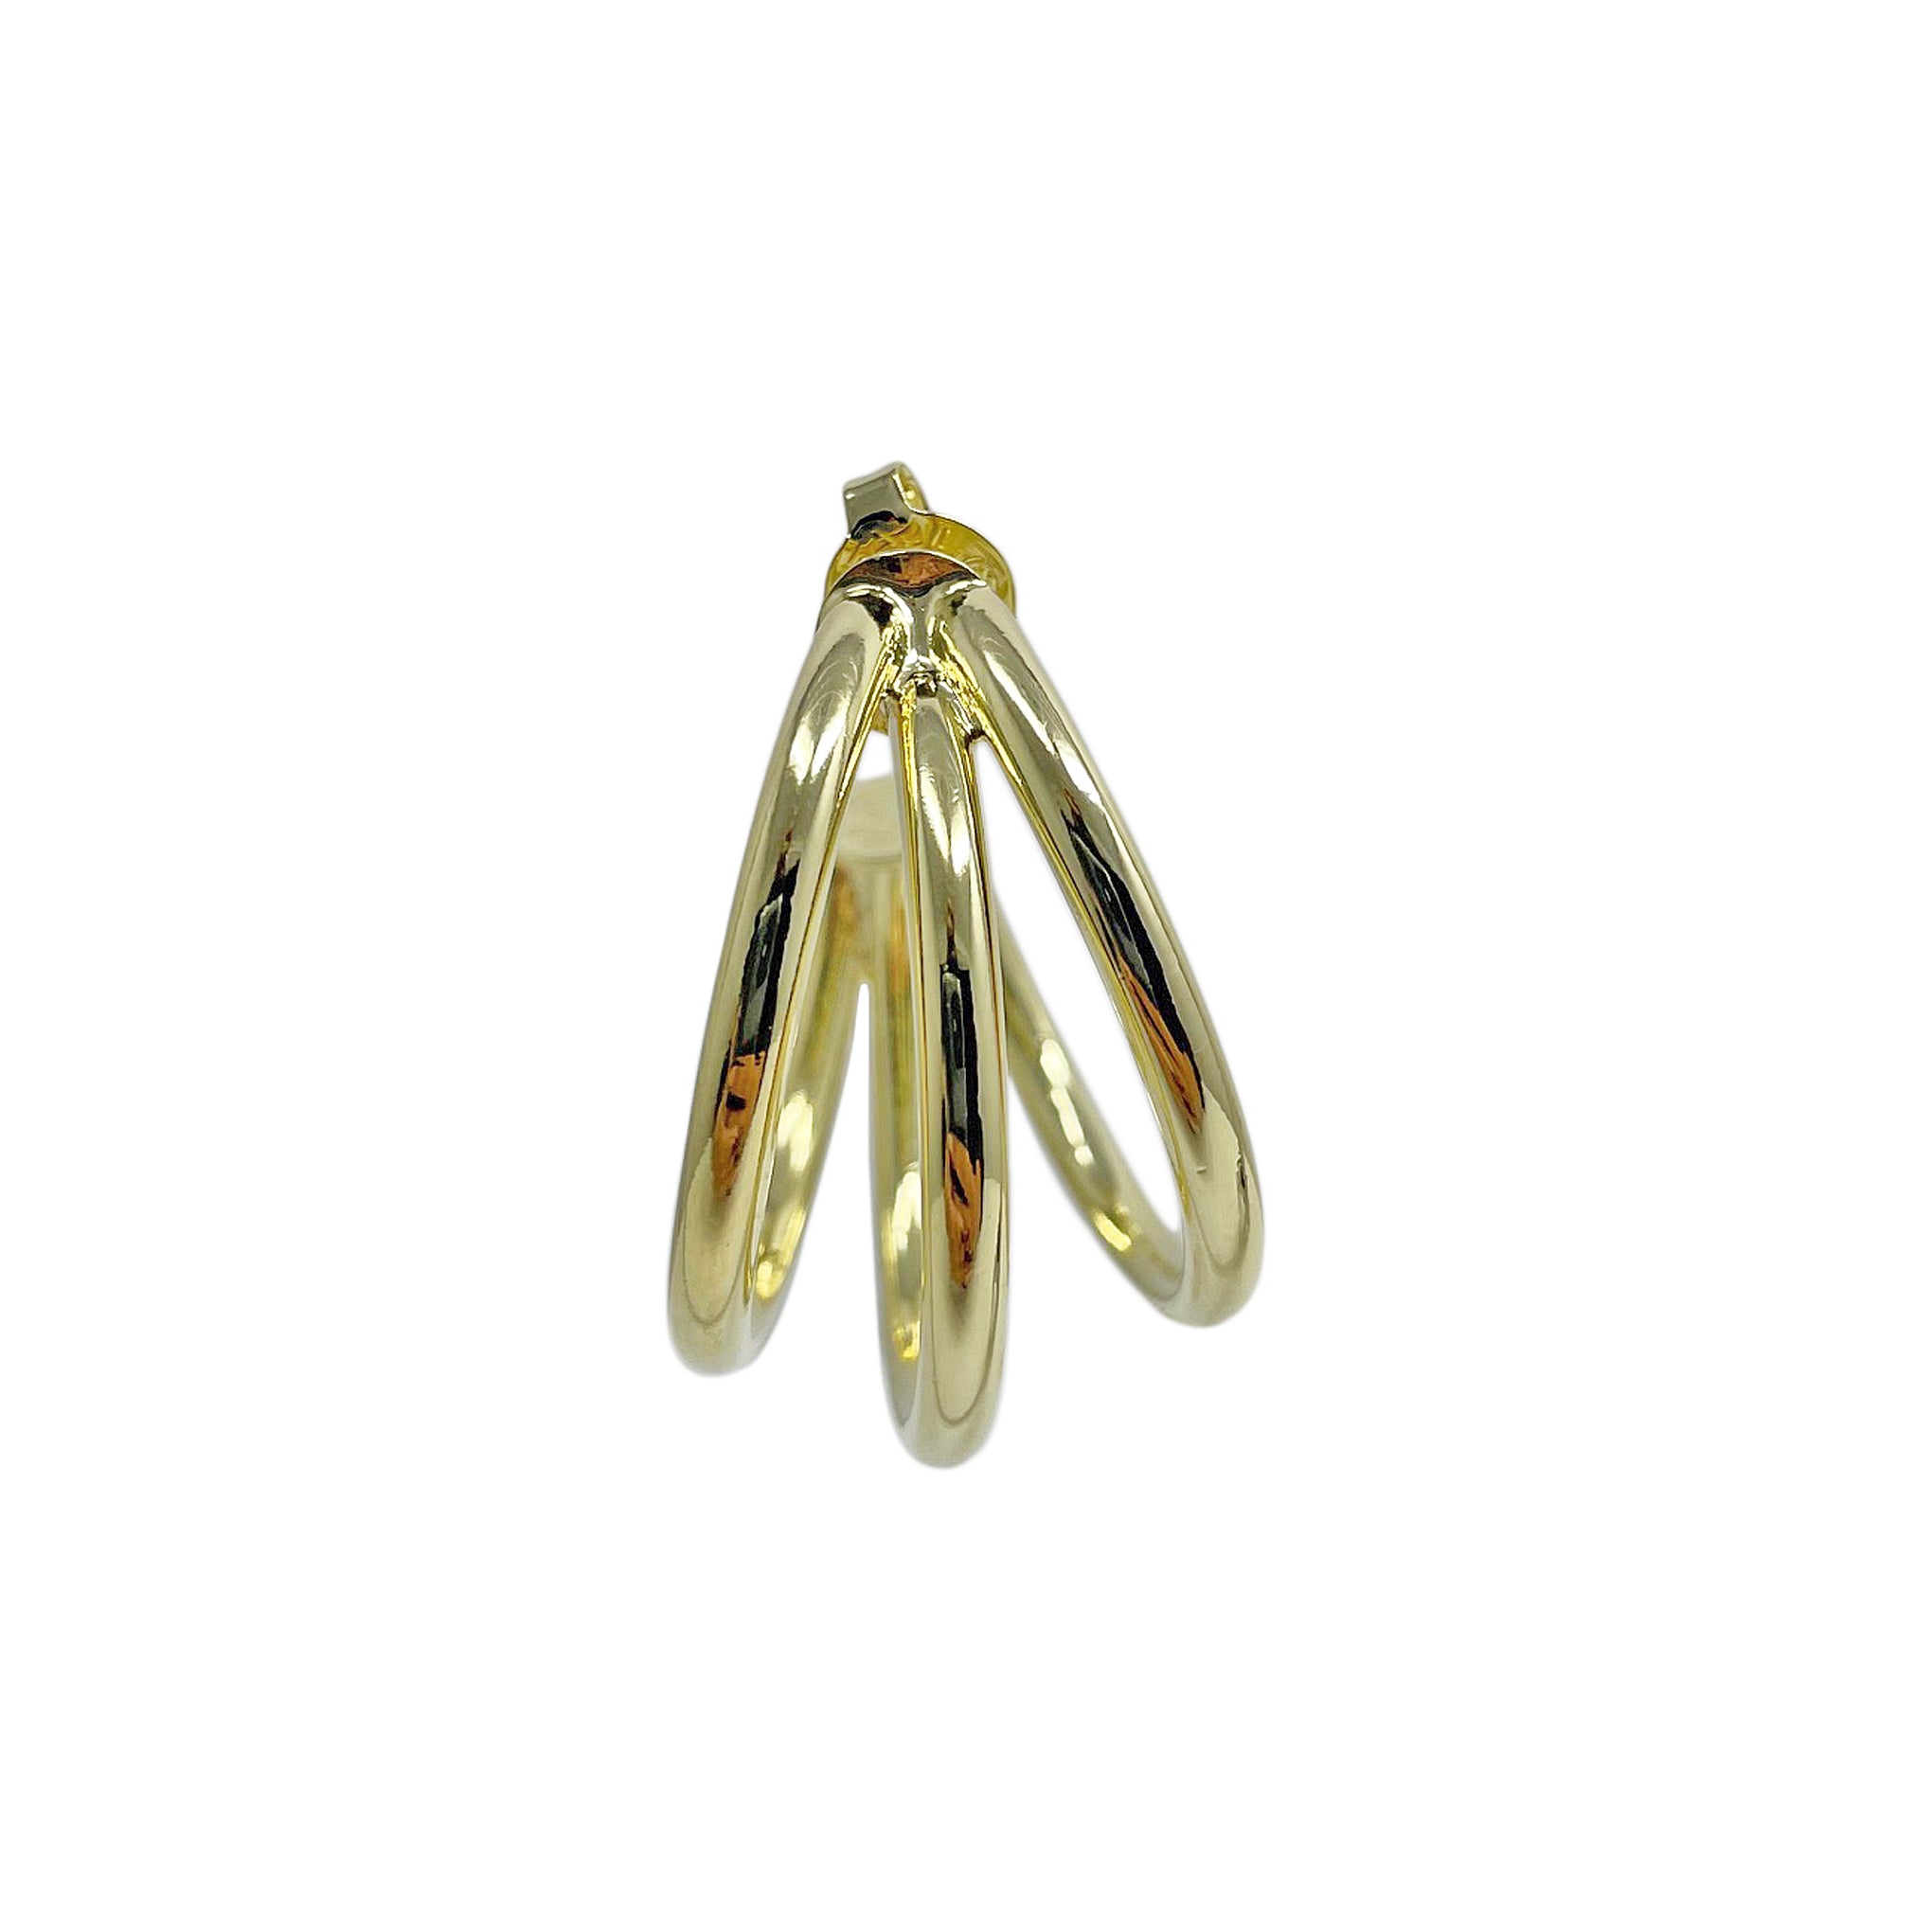 Sheila Fajl Claire Triple Hoop Earrings in Polished Gold Plated